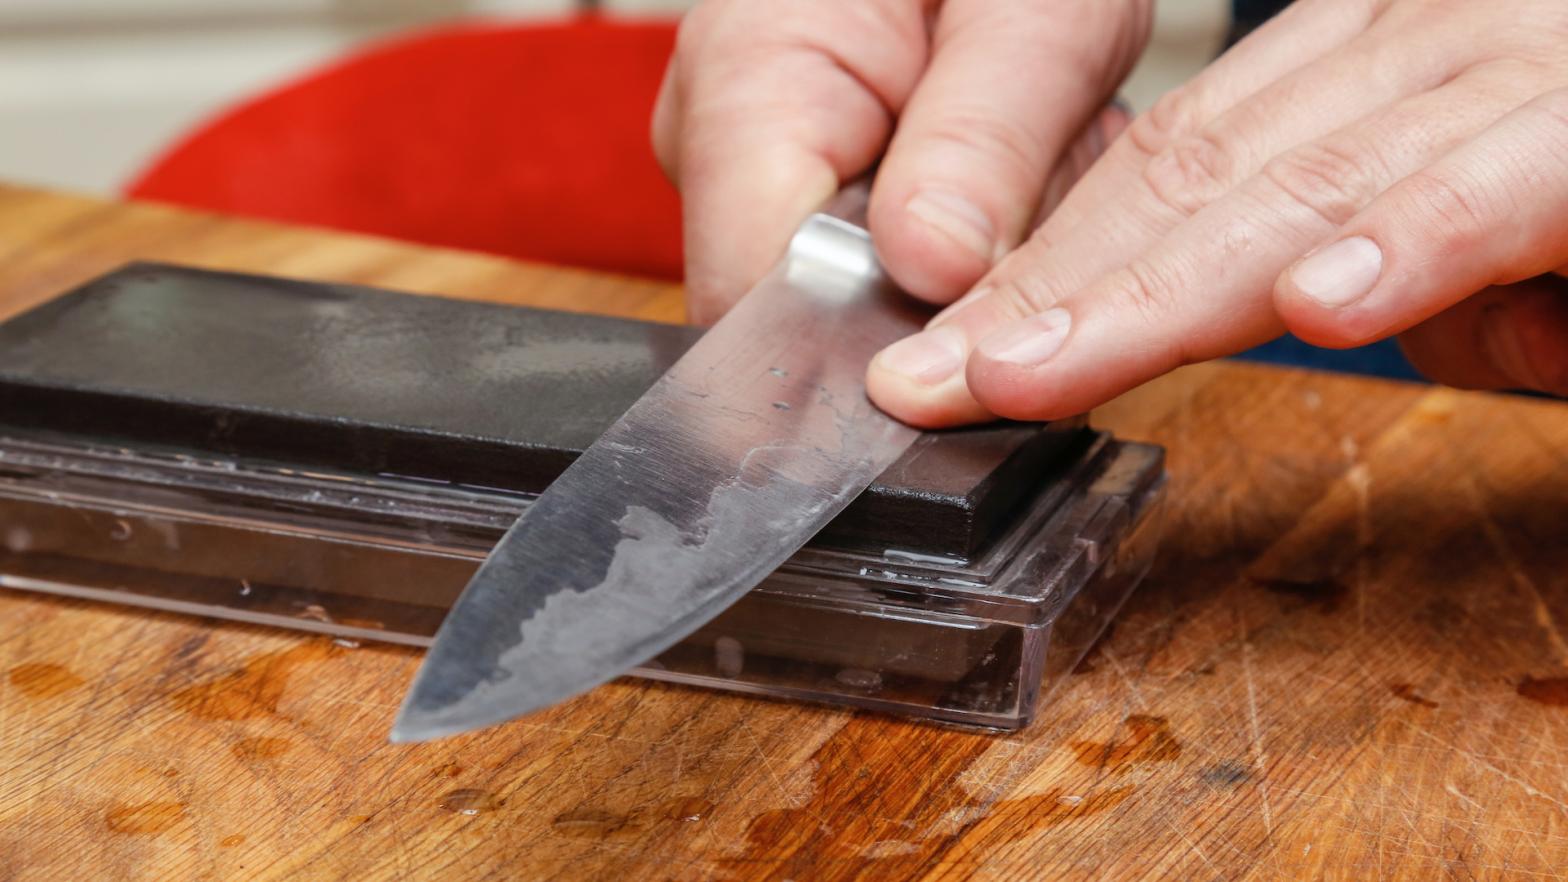 Sharpening knife on sharpening stone. Close up of man using whetstone for sharpening knife blade.